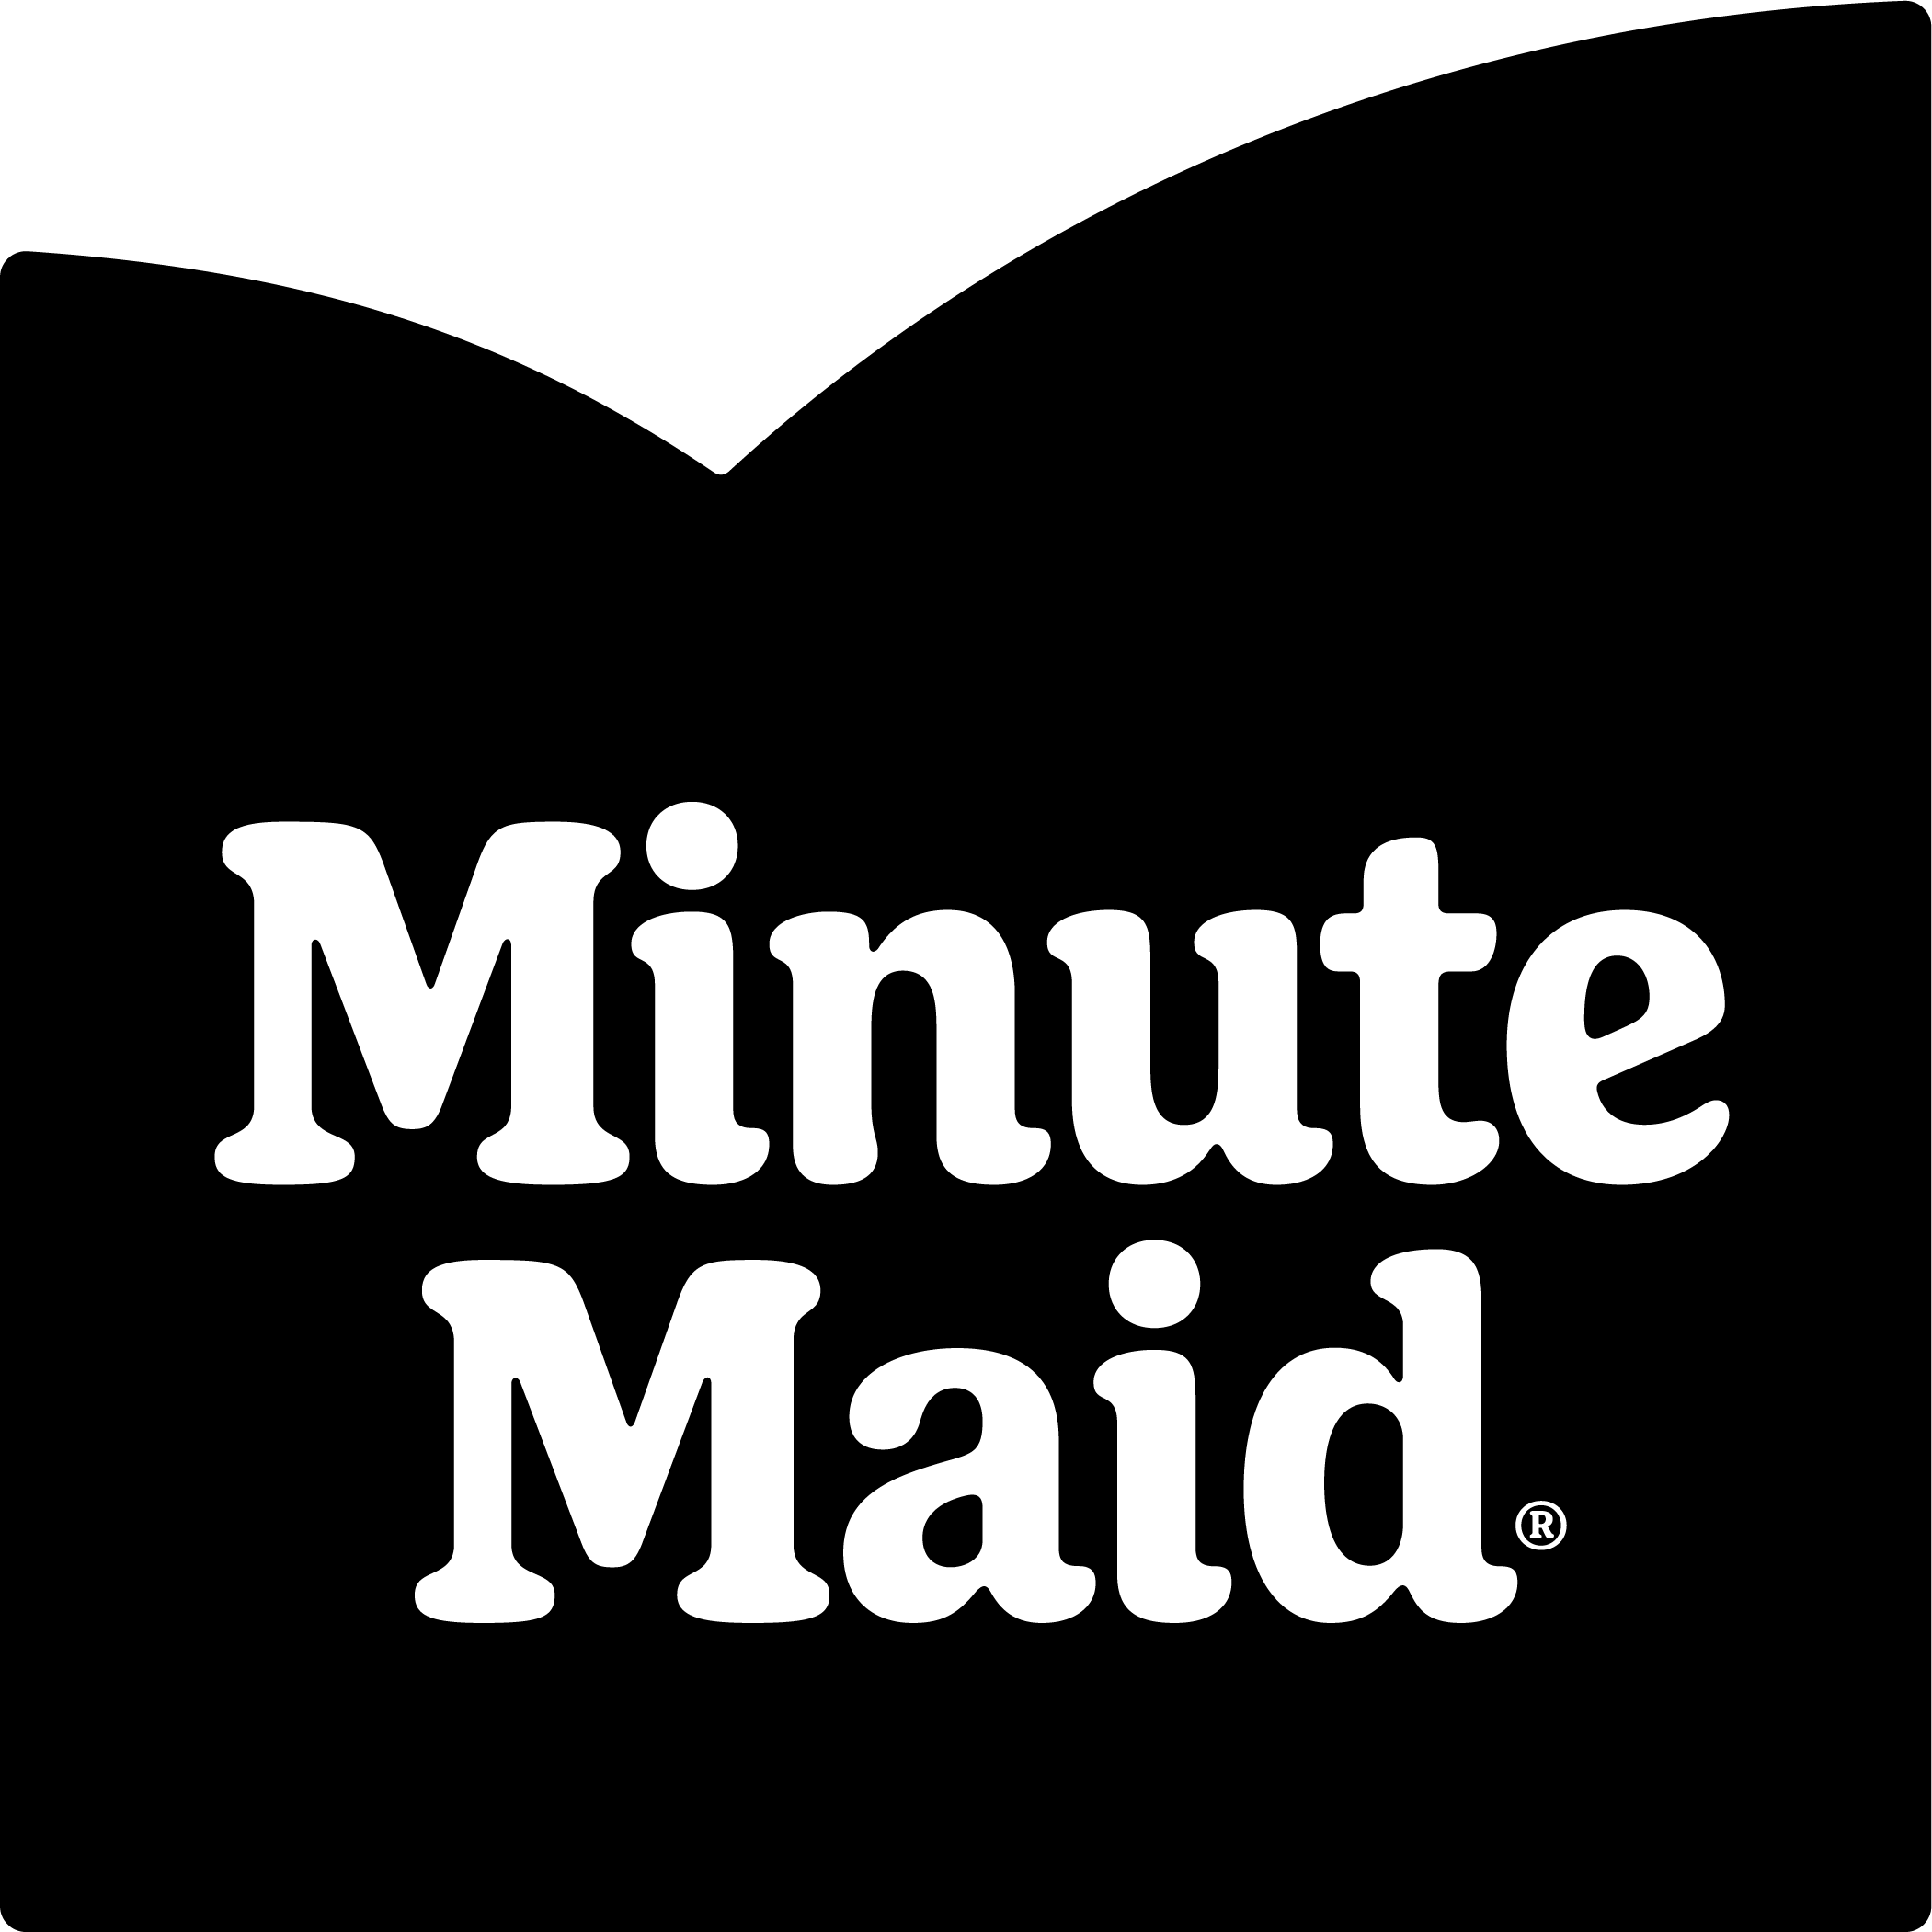 Minute Maid Logo